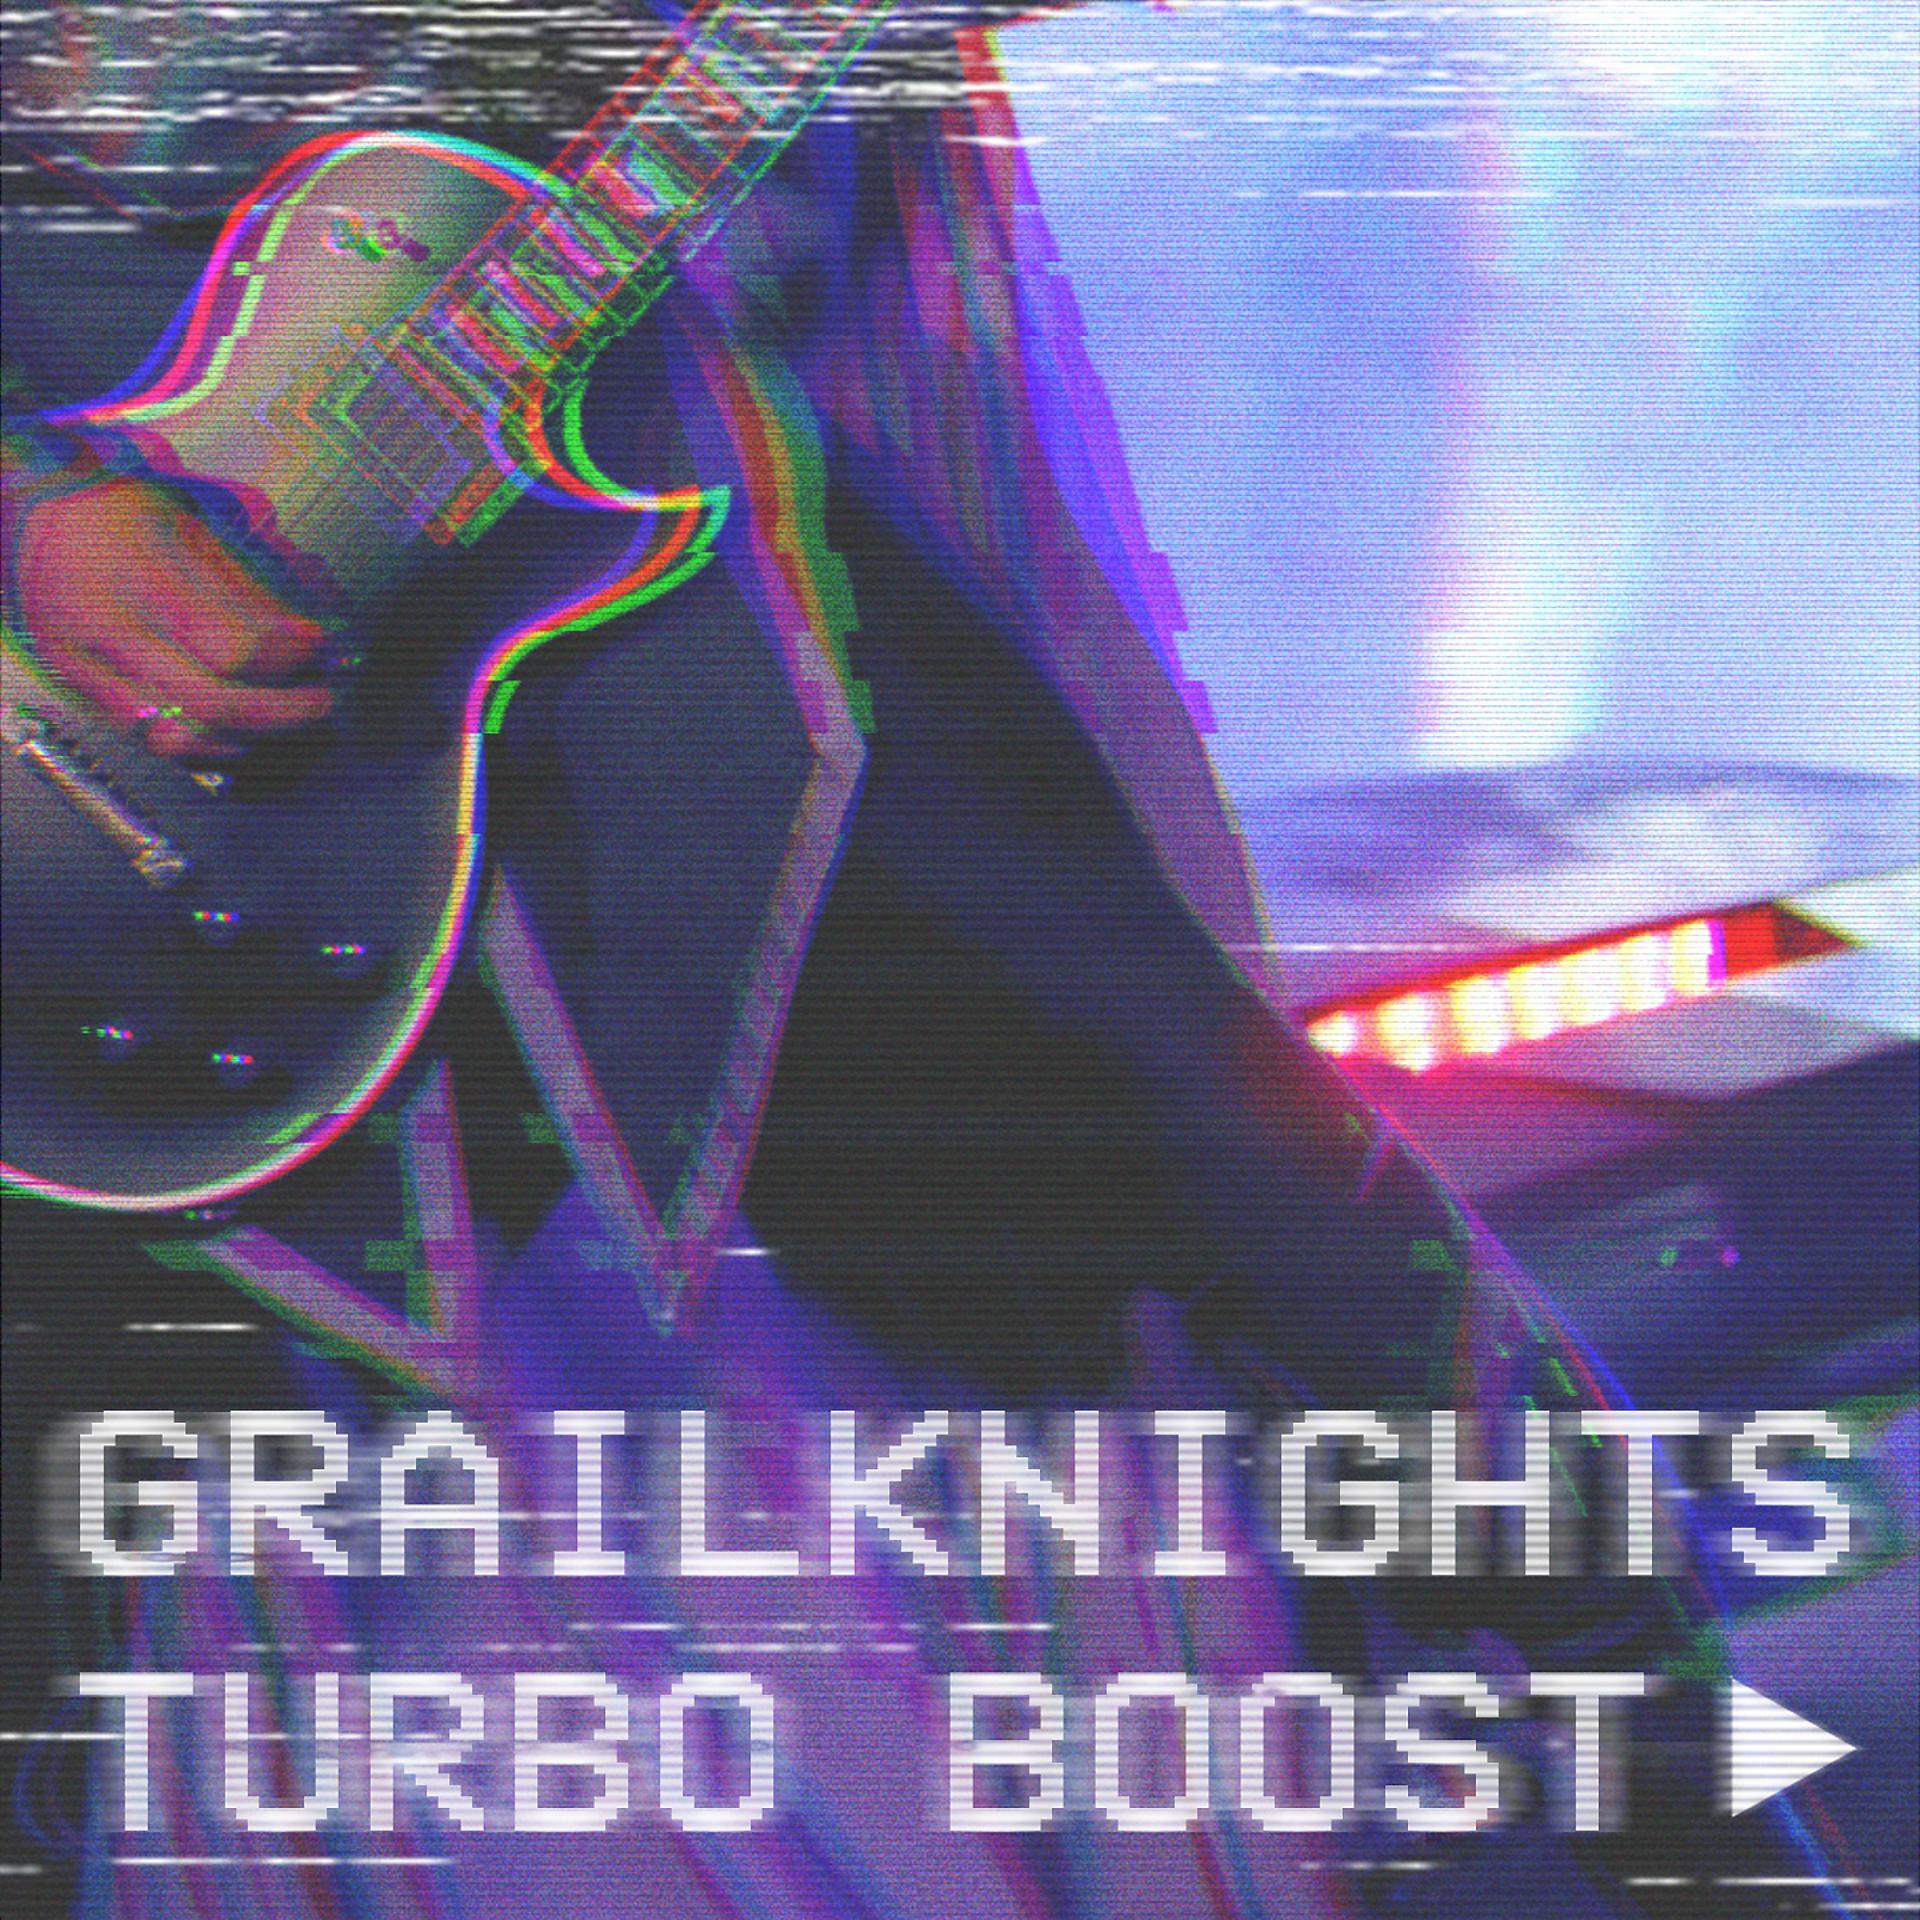 Постер альбома Turbo Boost